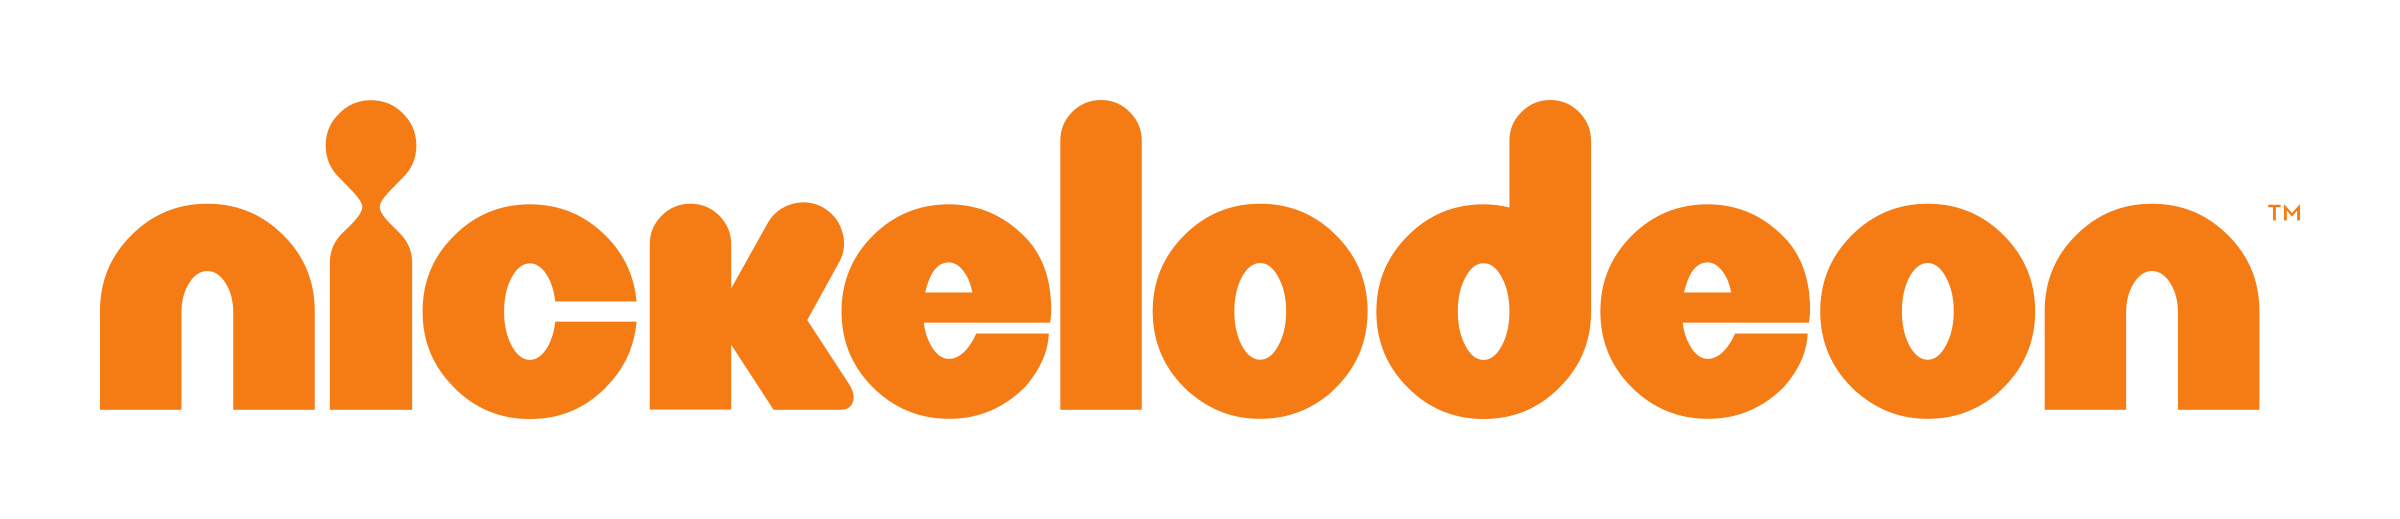 Nikelodeon Logo - Nickelodeon Logo PNG Transparent & SVG Vector